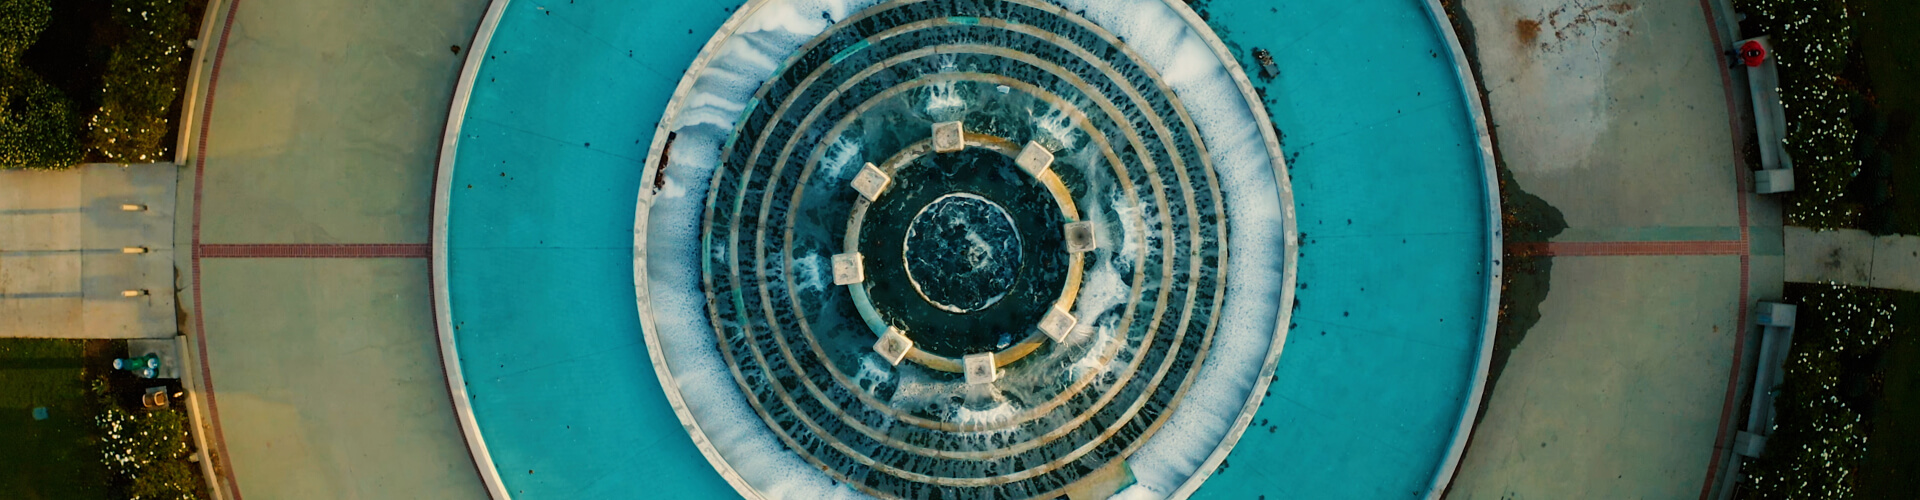 Circular Fountain Image